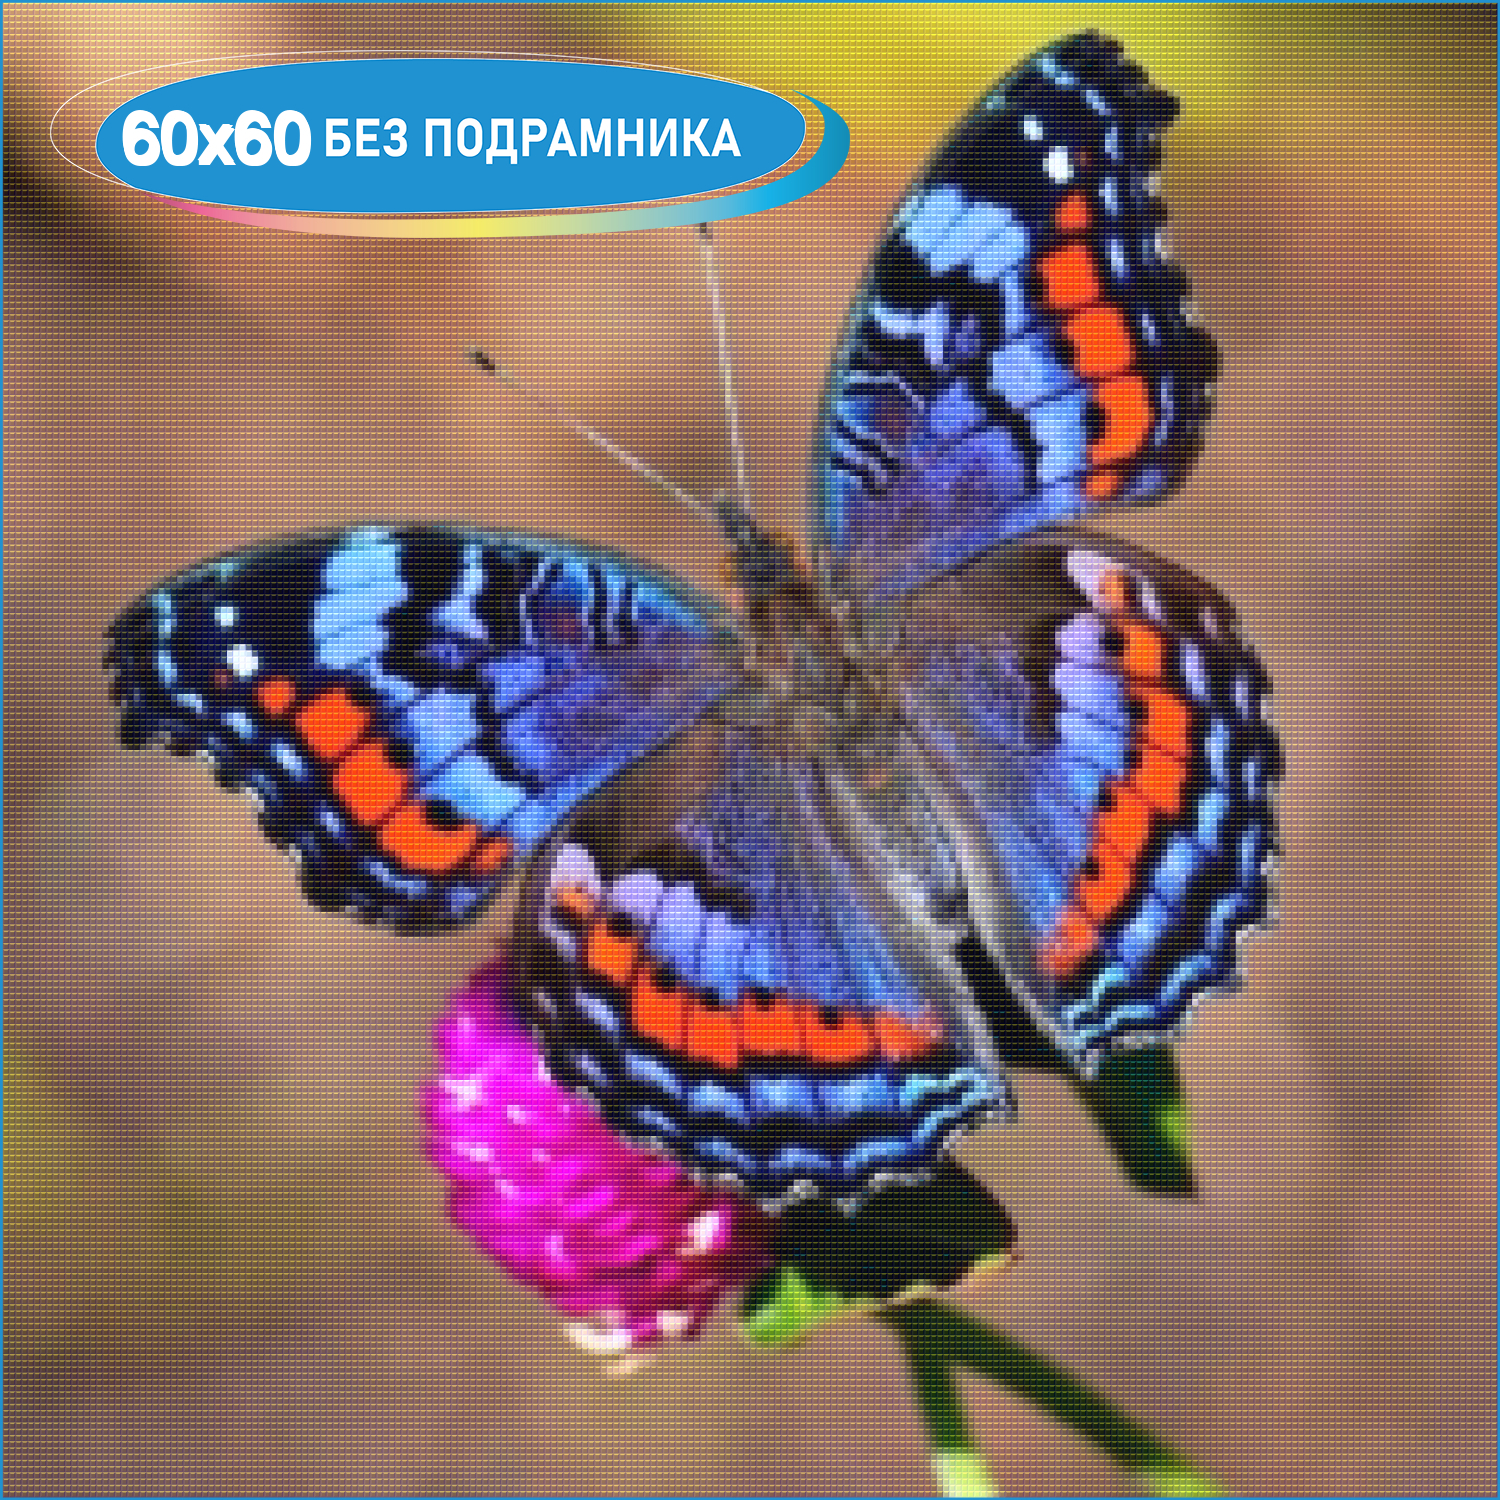 Разные крылья бабочек. Олимпиус Инферно бабочка. Бабочка крапчатый Арлекин. Радужная голубая бабочка Махаон. Бабочка Баттерфляй.